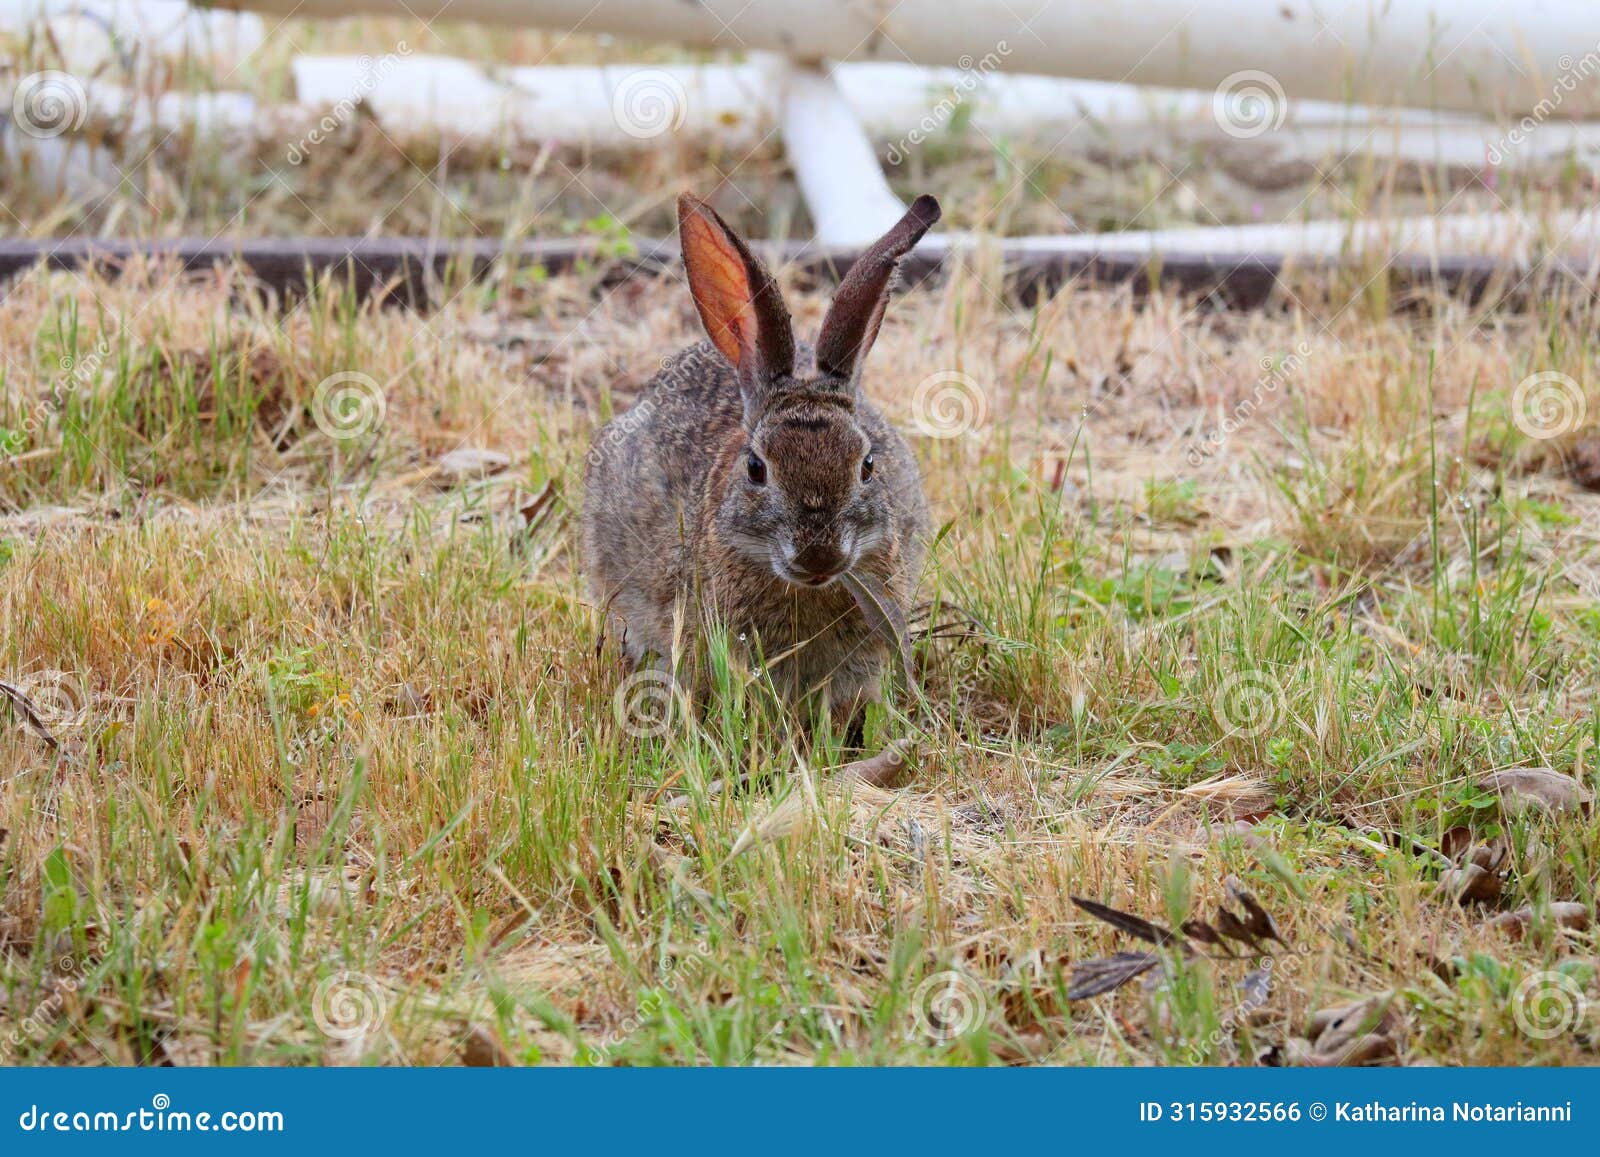 california wildlife series - desert cottontail rabbit - sylvilagus audubonii